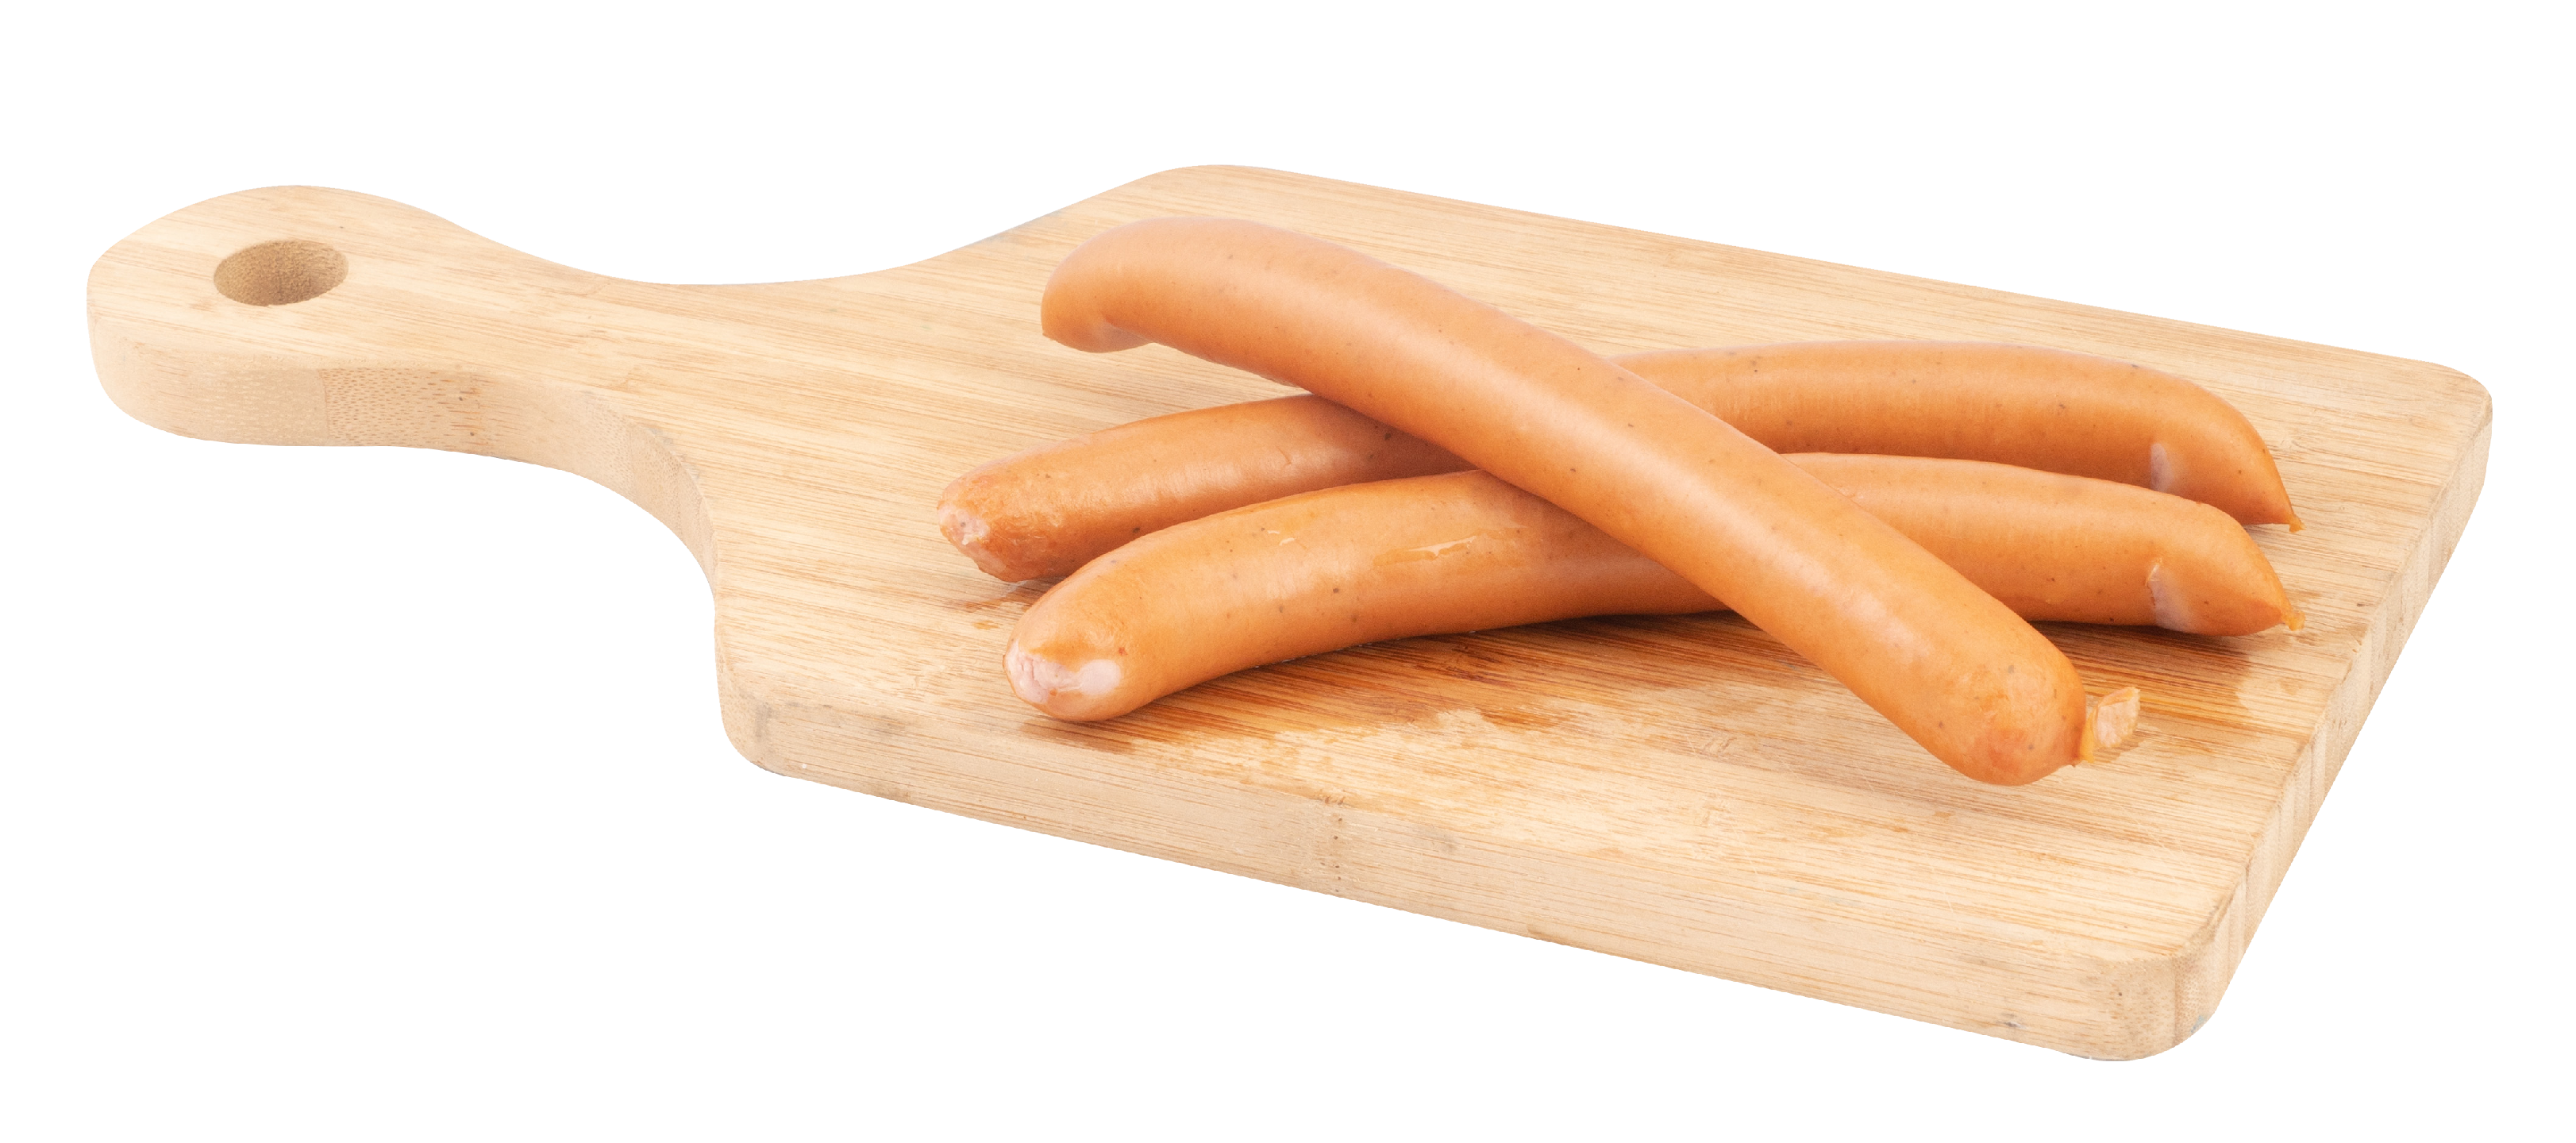 Sibylla Suomalainen Hotdog-nakki  80x60g pakaste